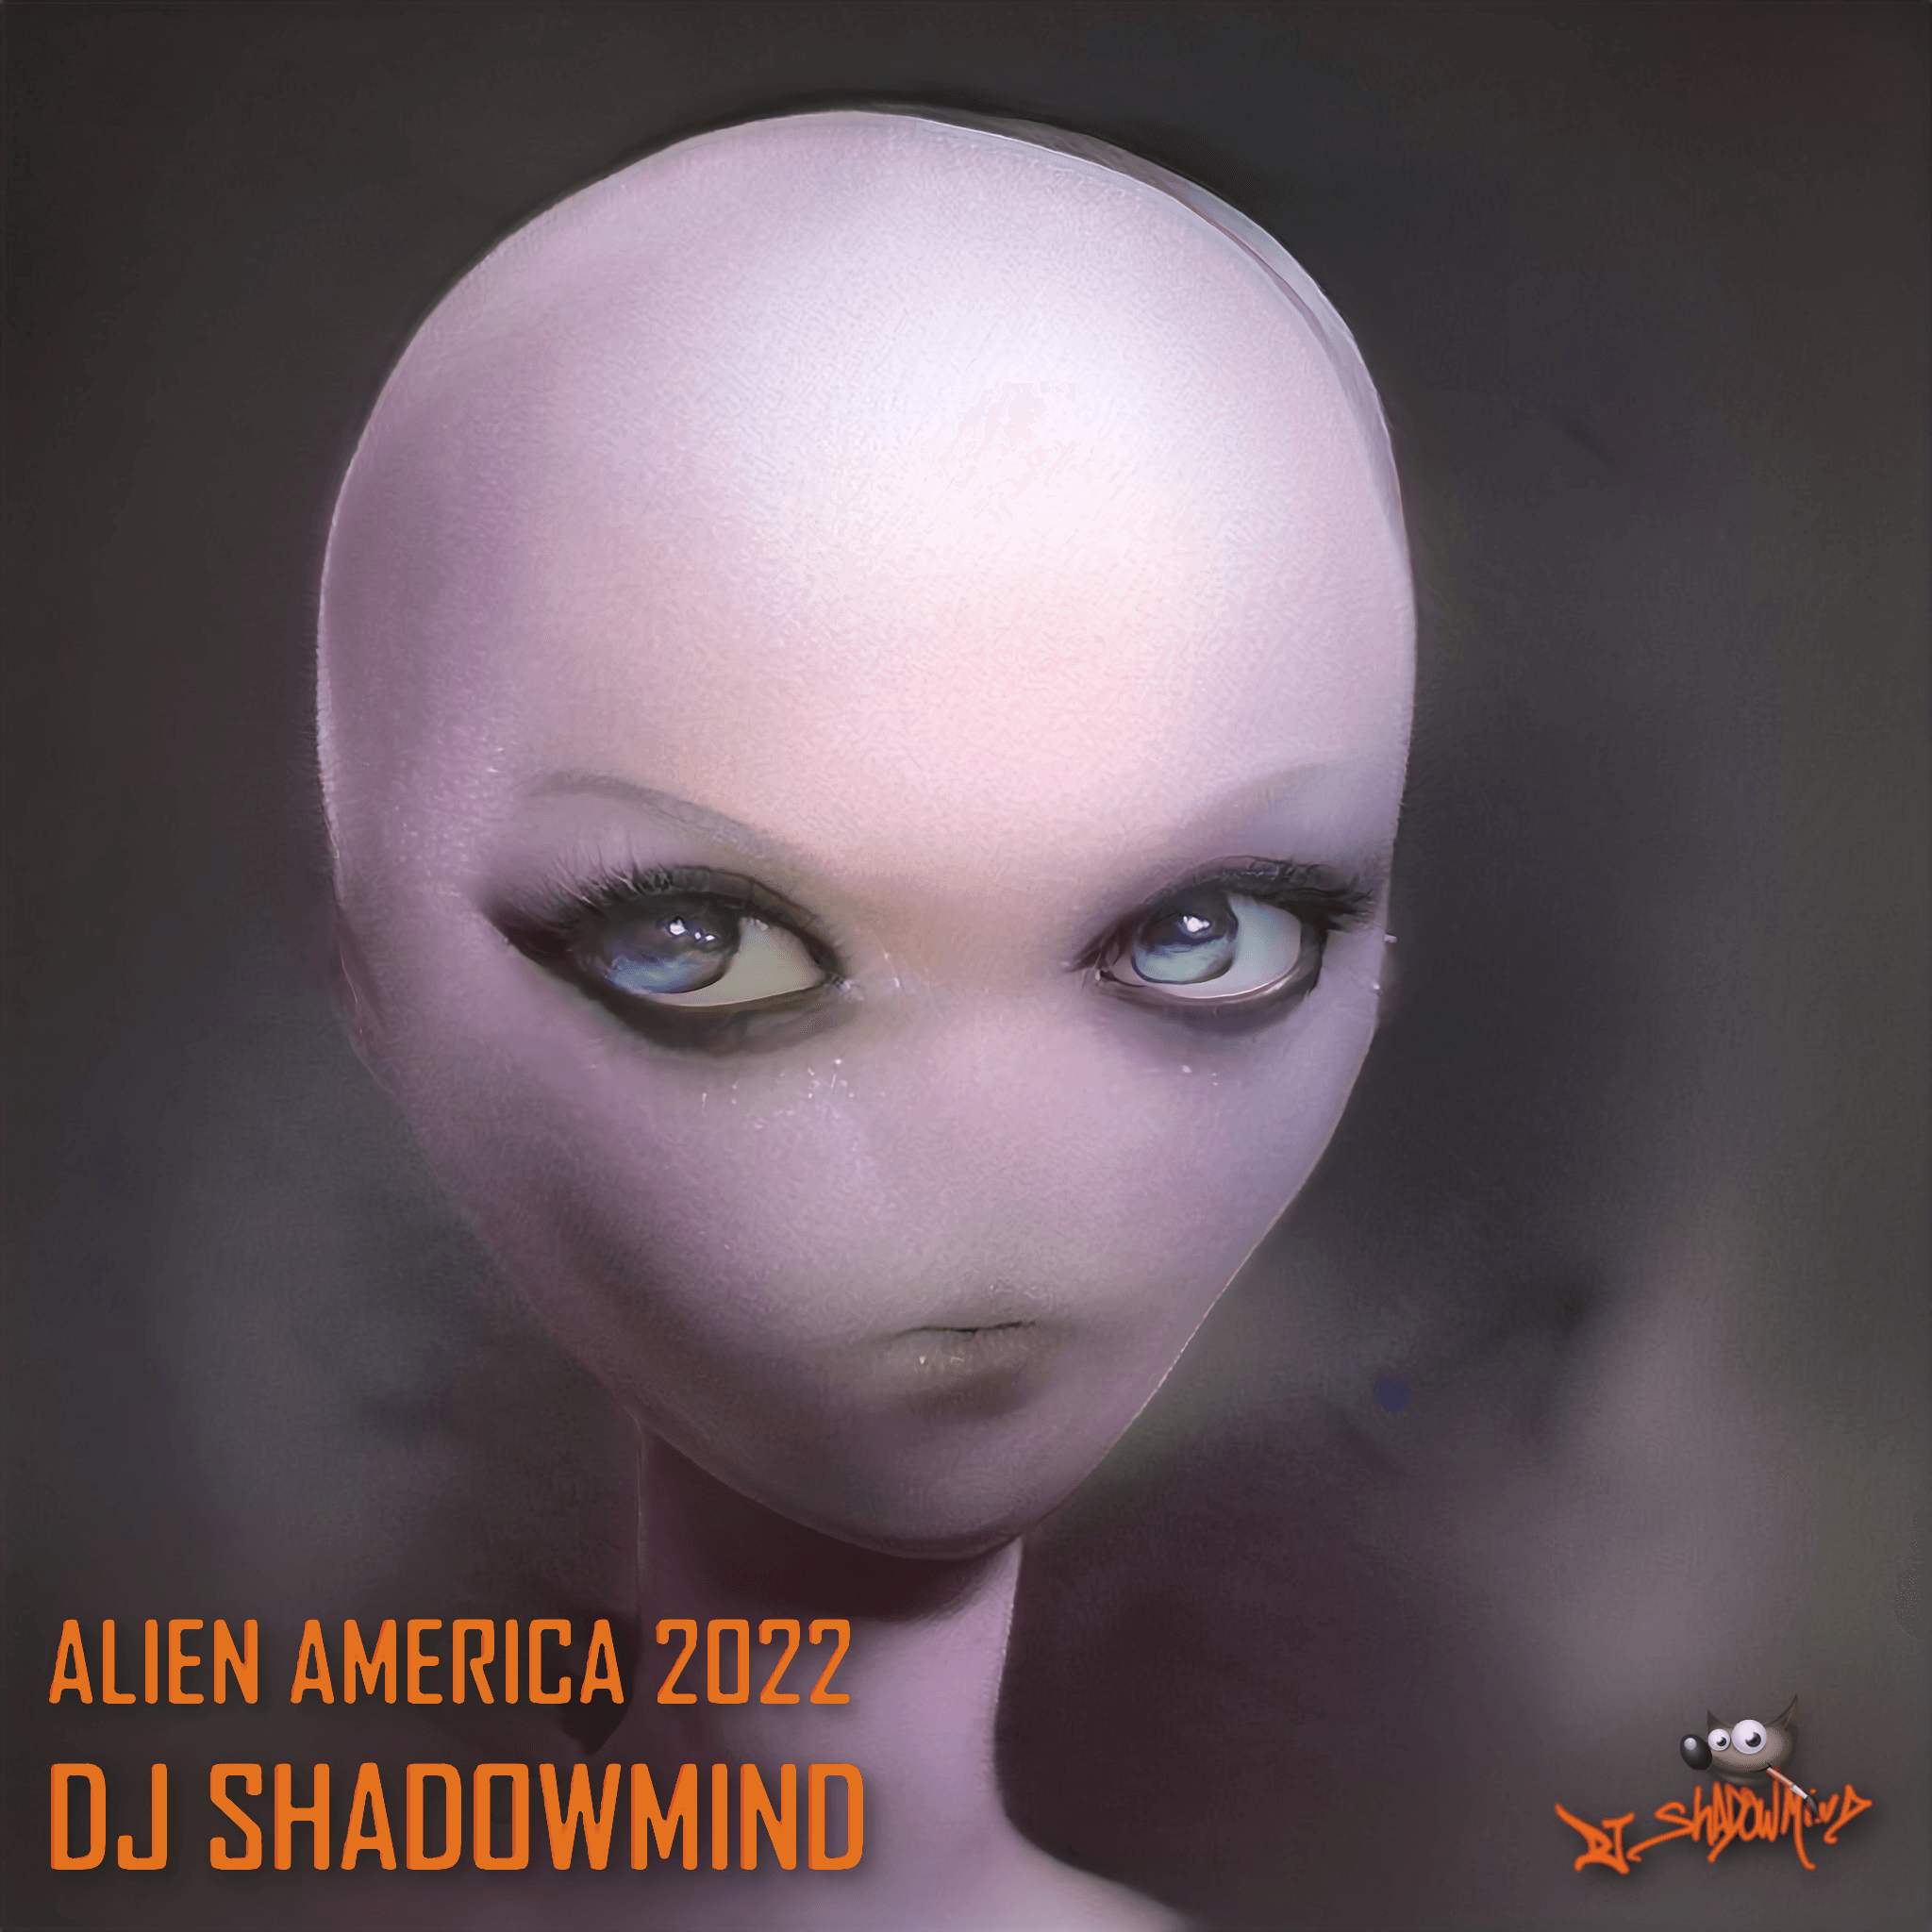 Alien America 2022 - Agent 117